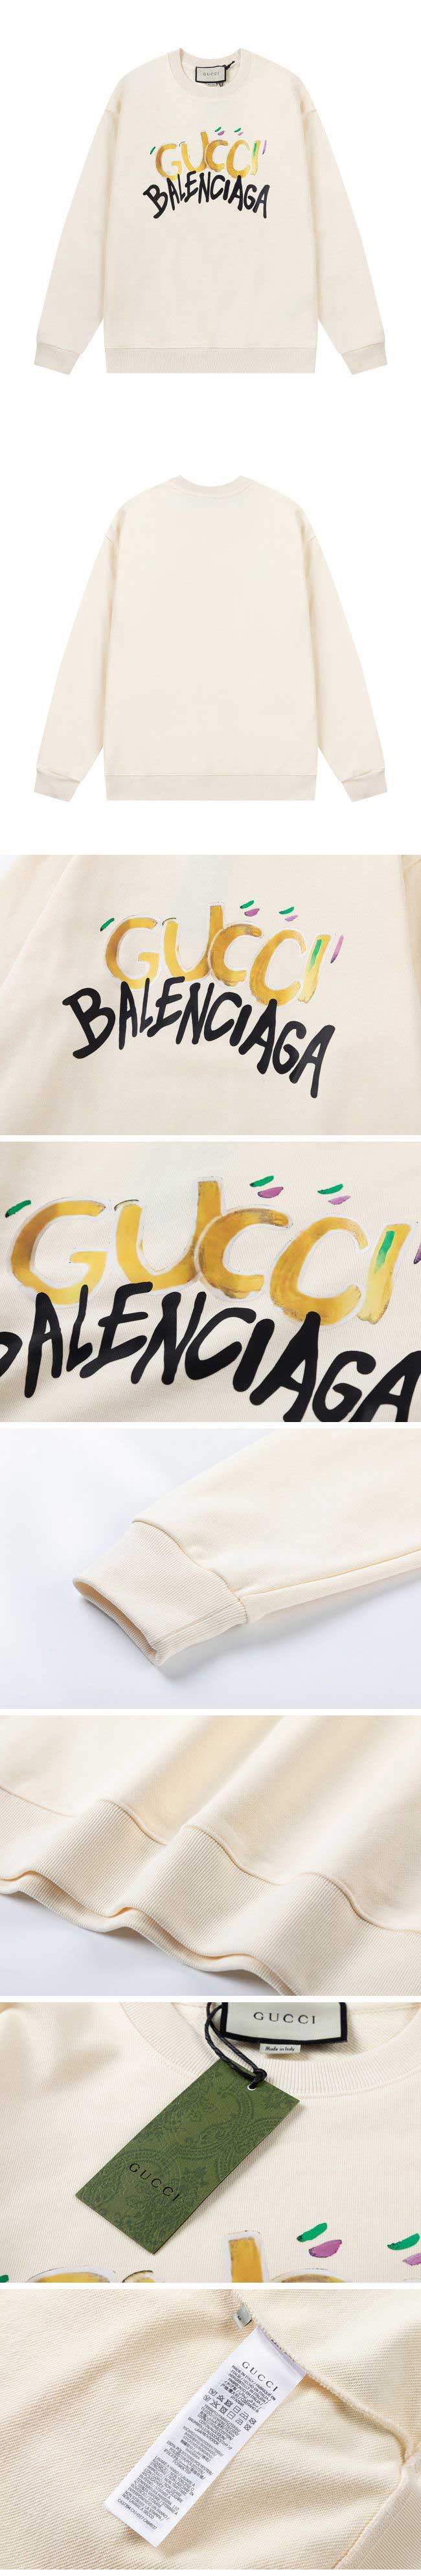 Gucci x Balenciaga Print Logo Sweat グッチ x バレンシアガ プリント ロゴ スウェット ホワイト